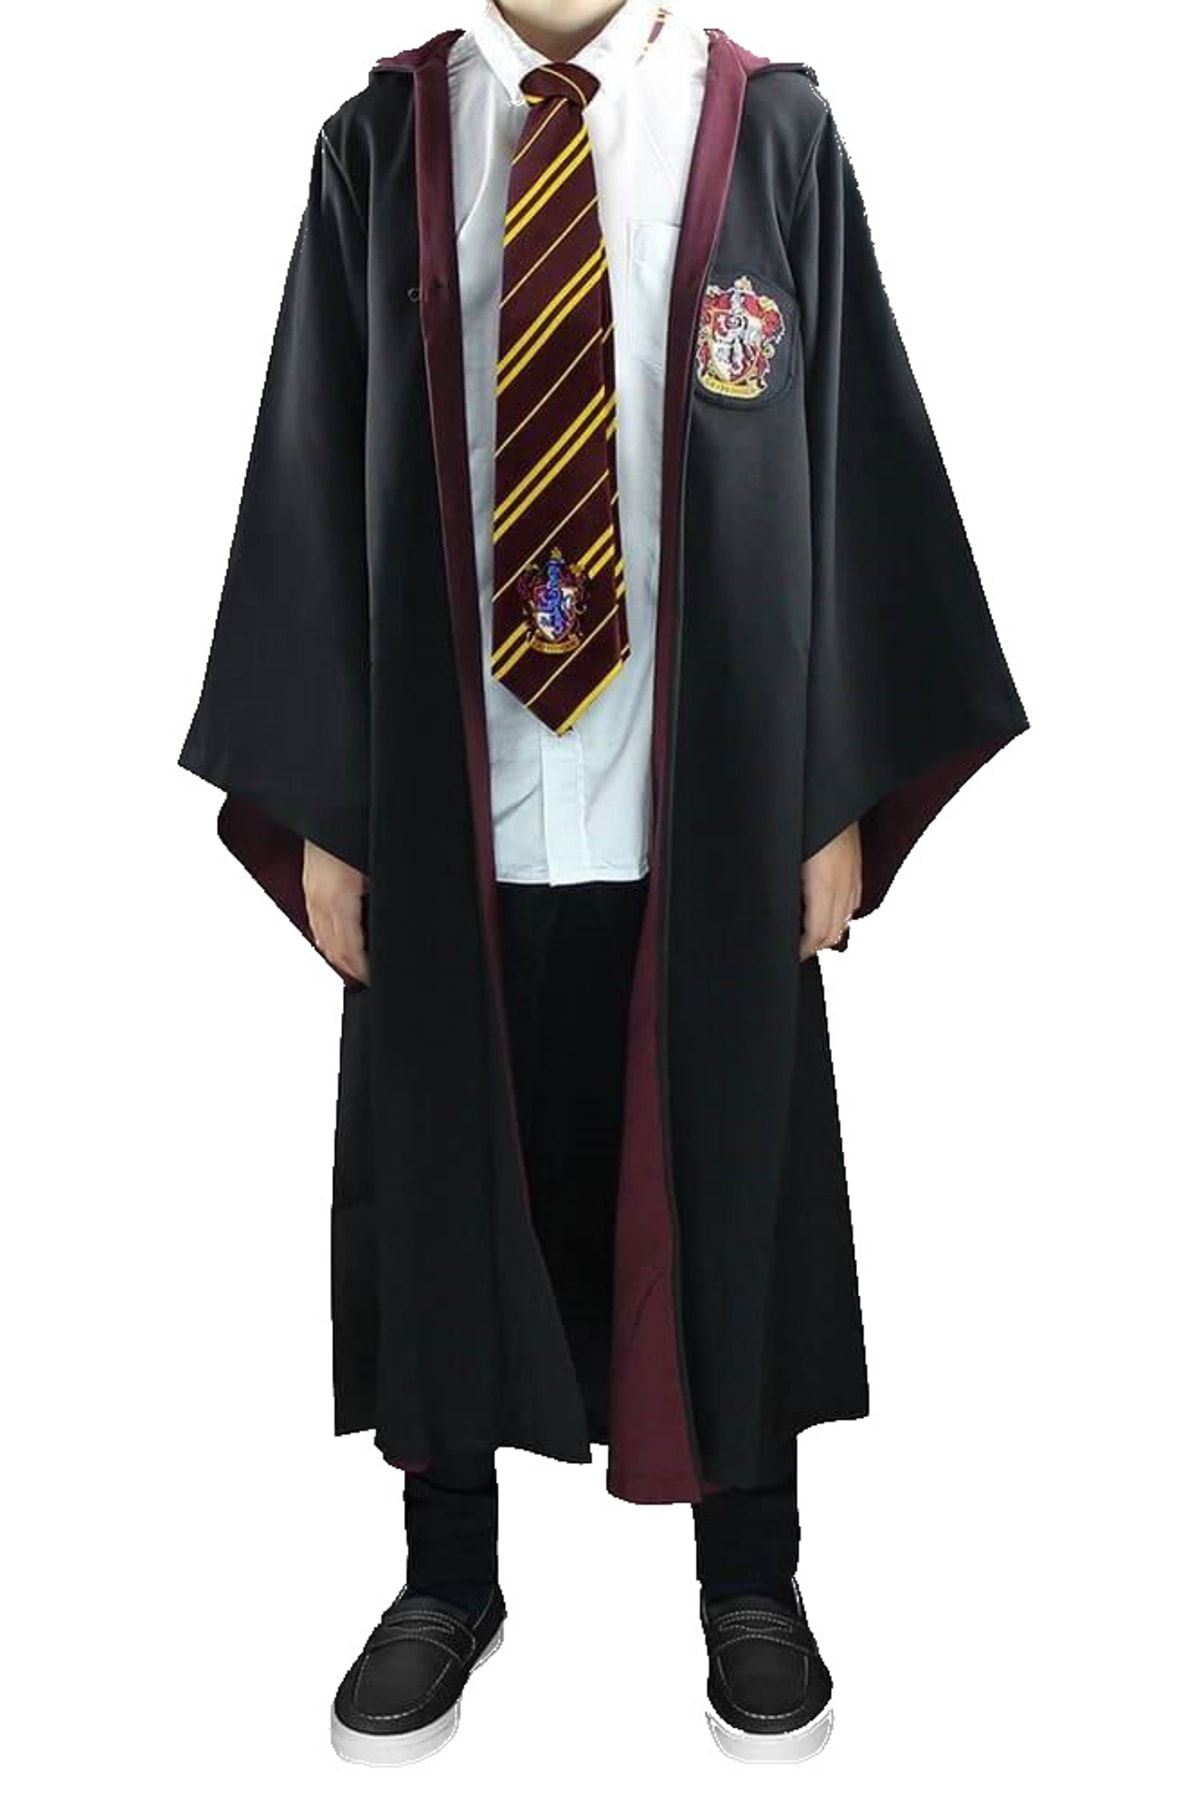 LEVO Harry Potter Cübbe Gryffindor Model Üst Kalite Cübbe Pelerin